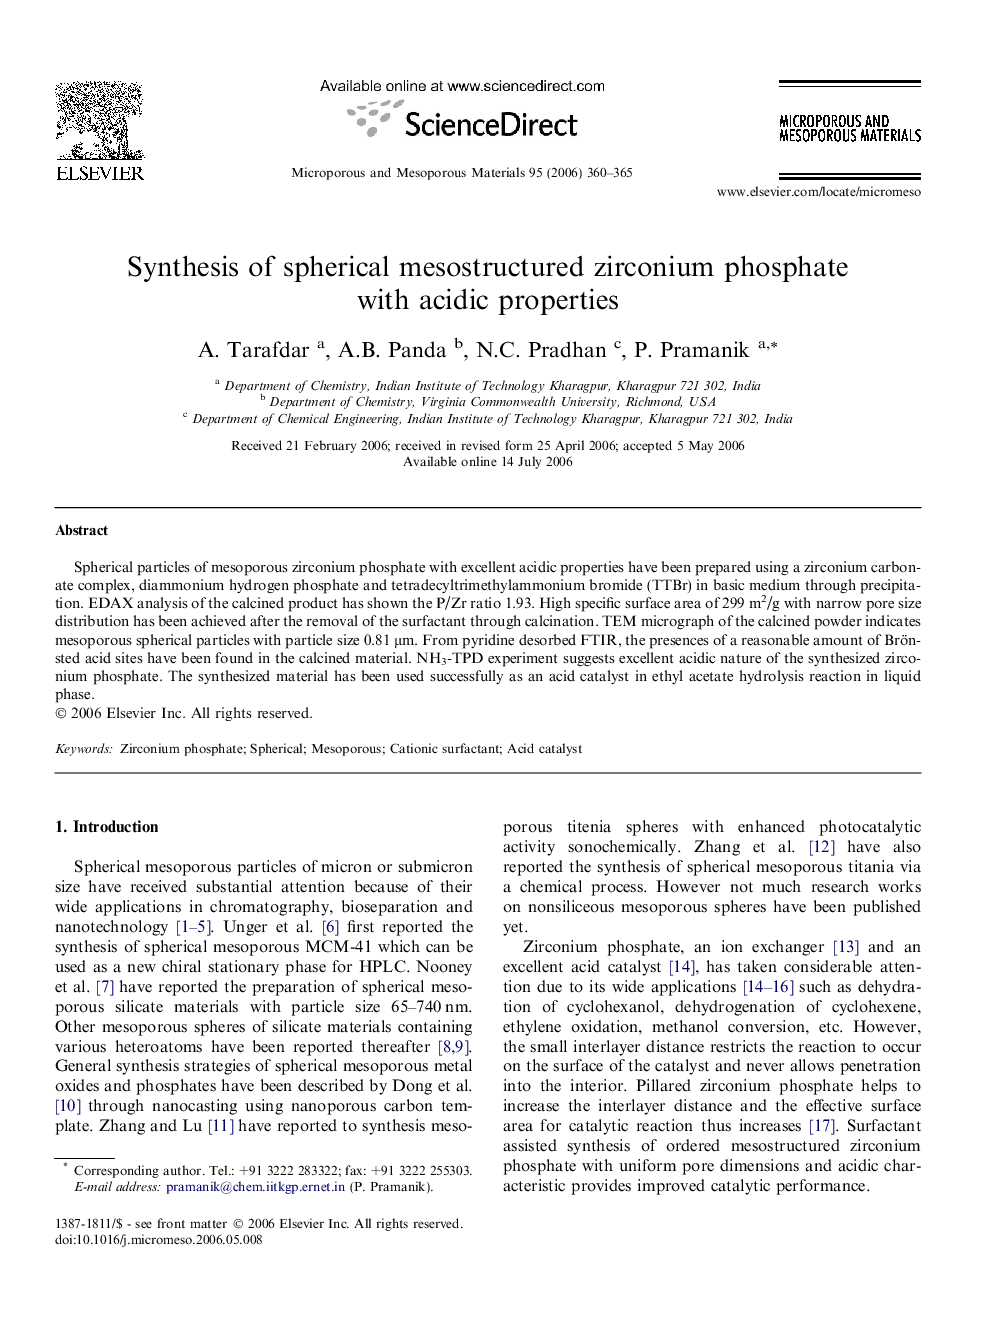 Synthesis of spherical mesostructured zirconium phosphate with acidic properties